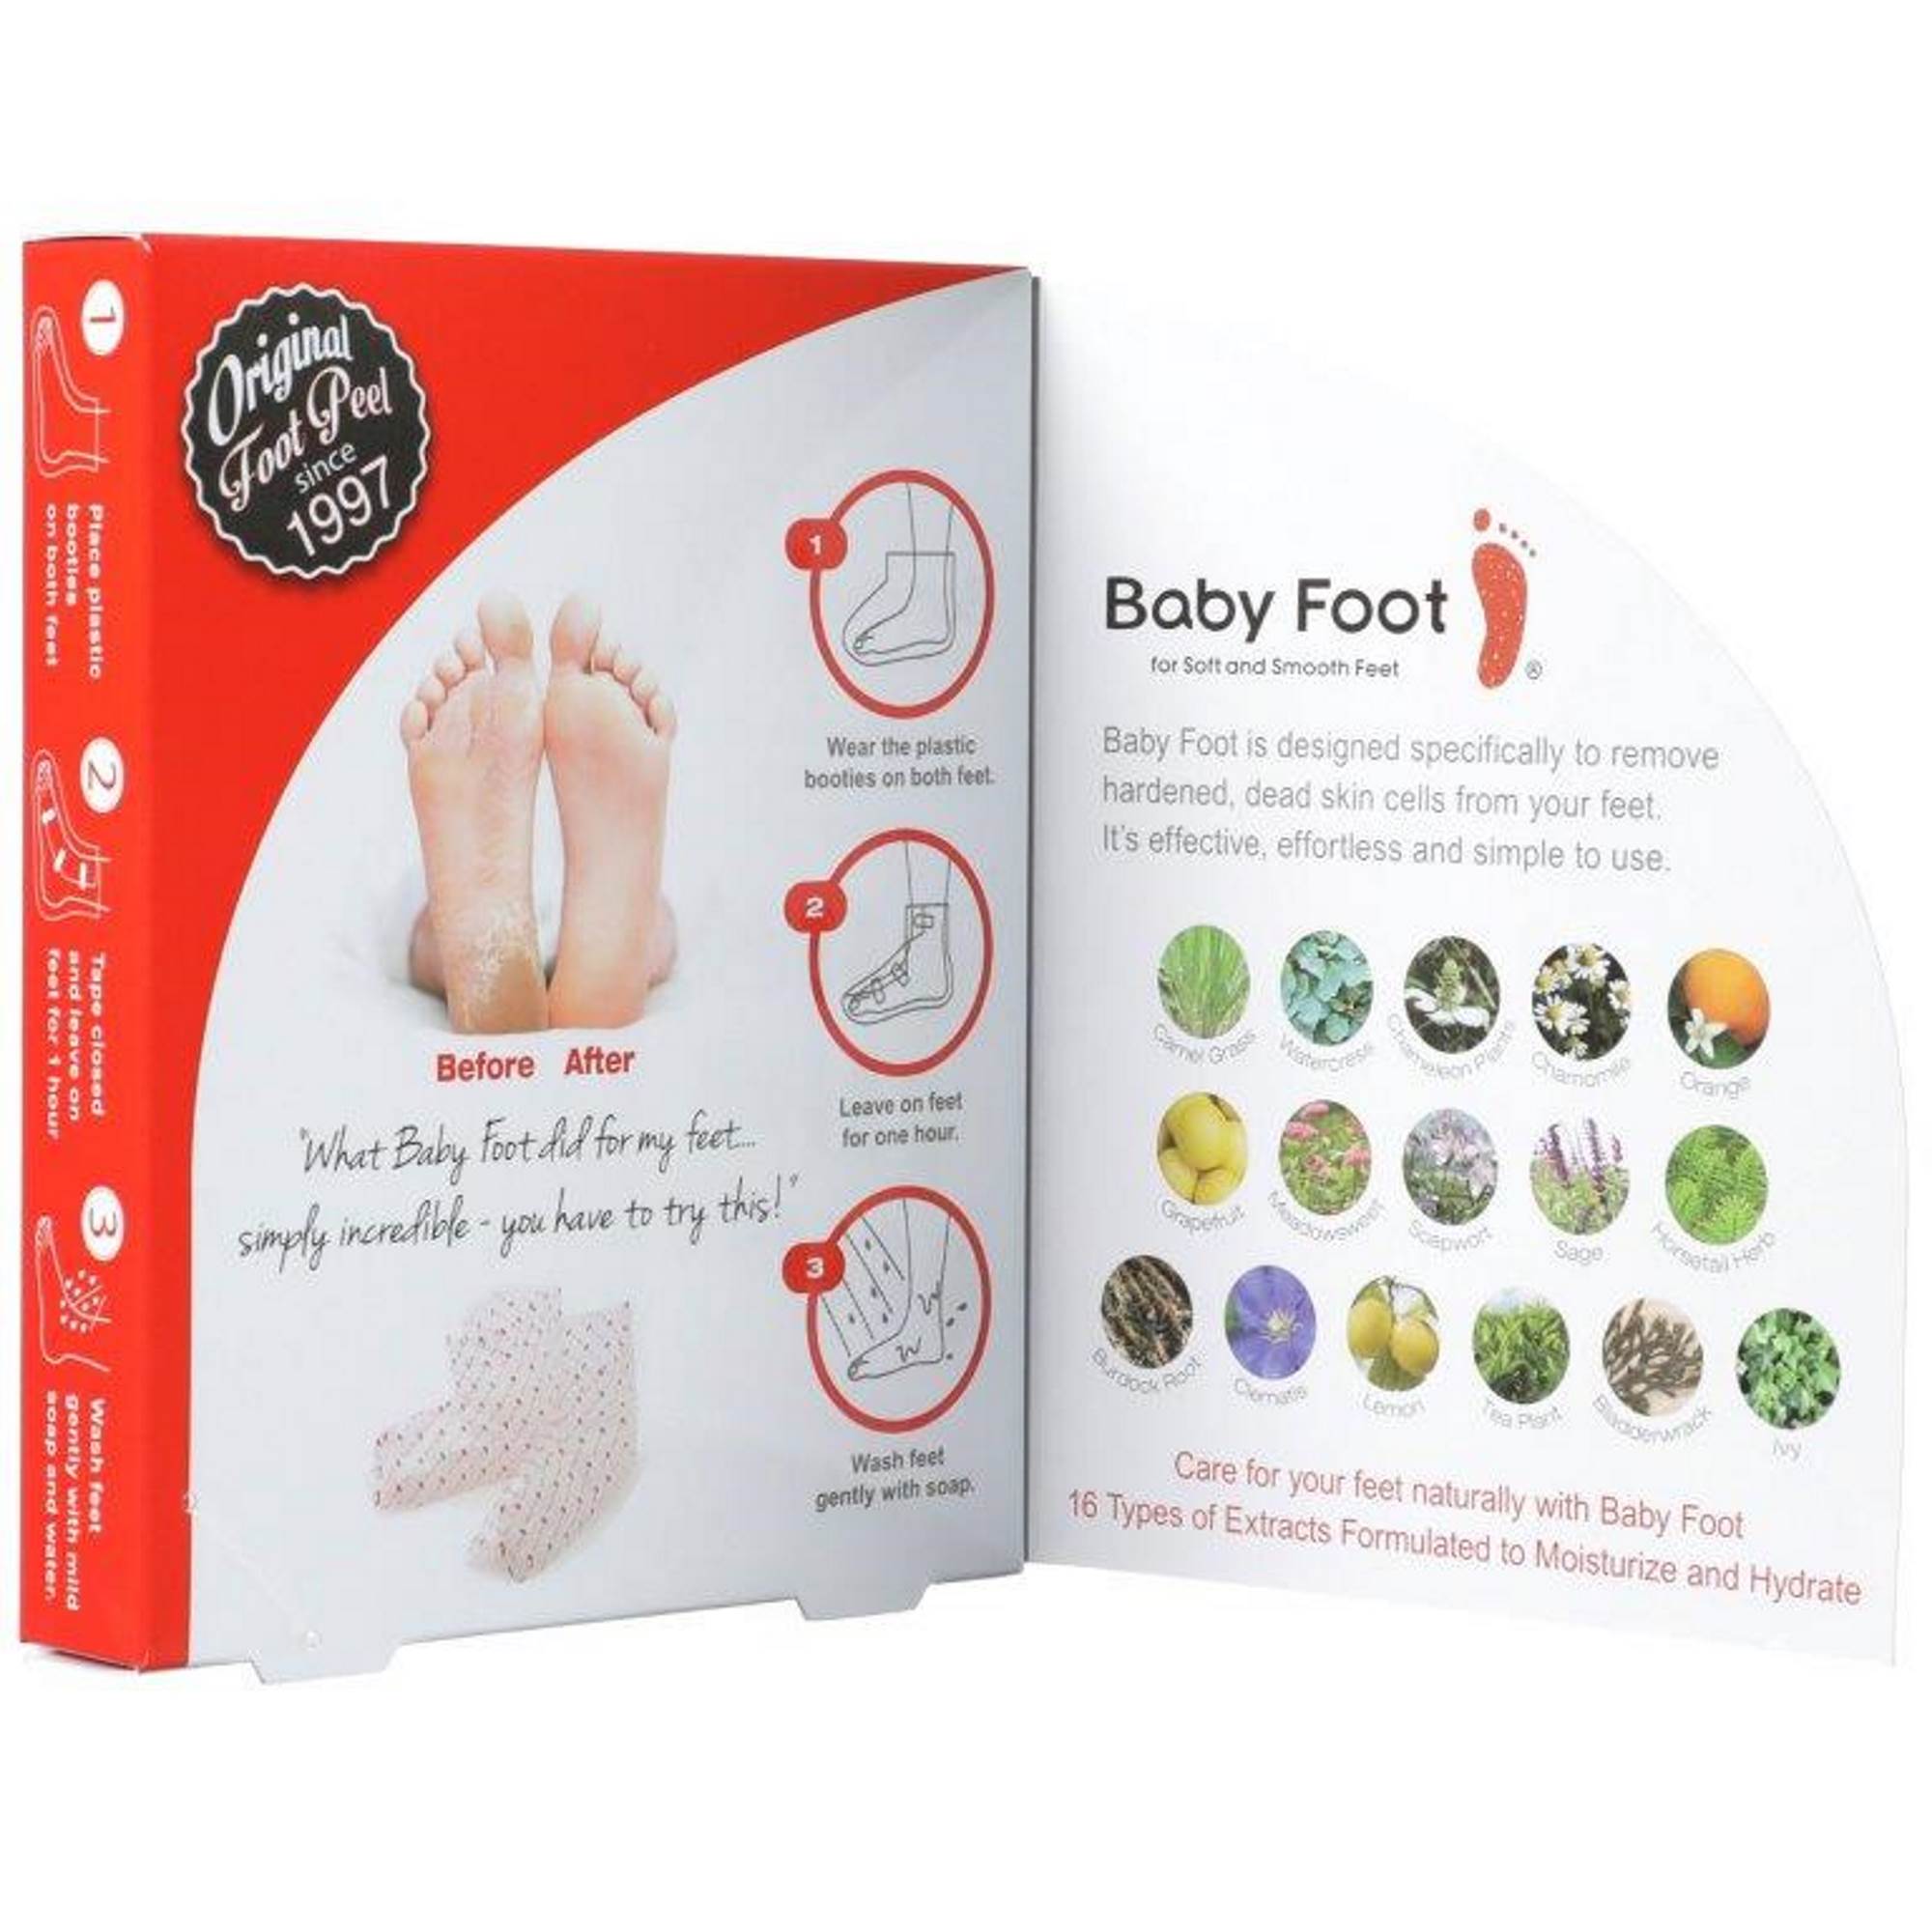 Baby Foot Exfoliant Foot Peel Lavender Scented 2.4 oz